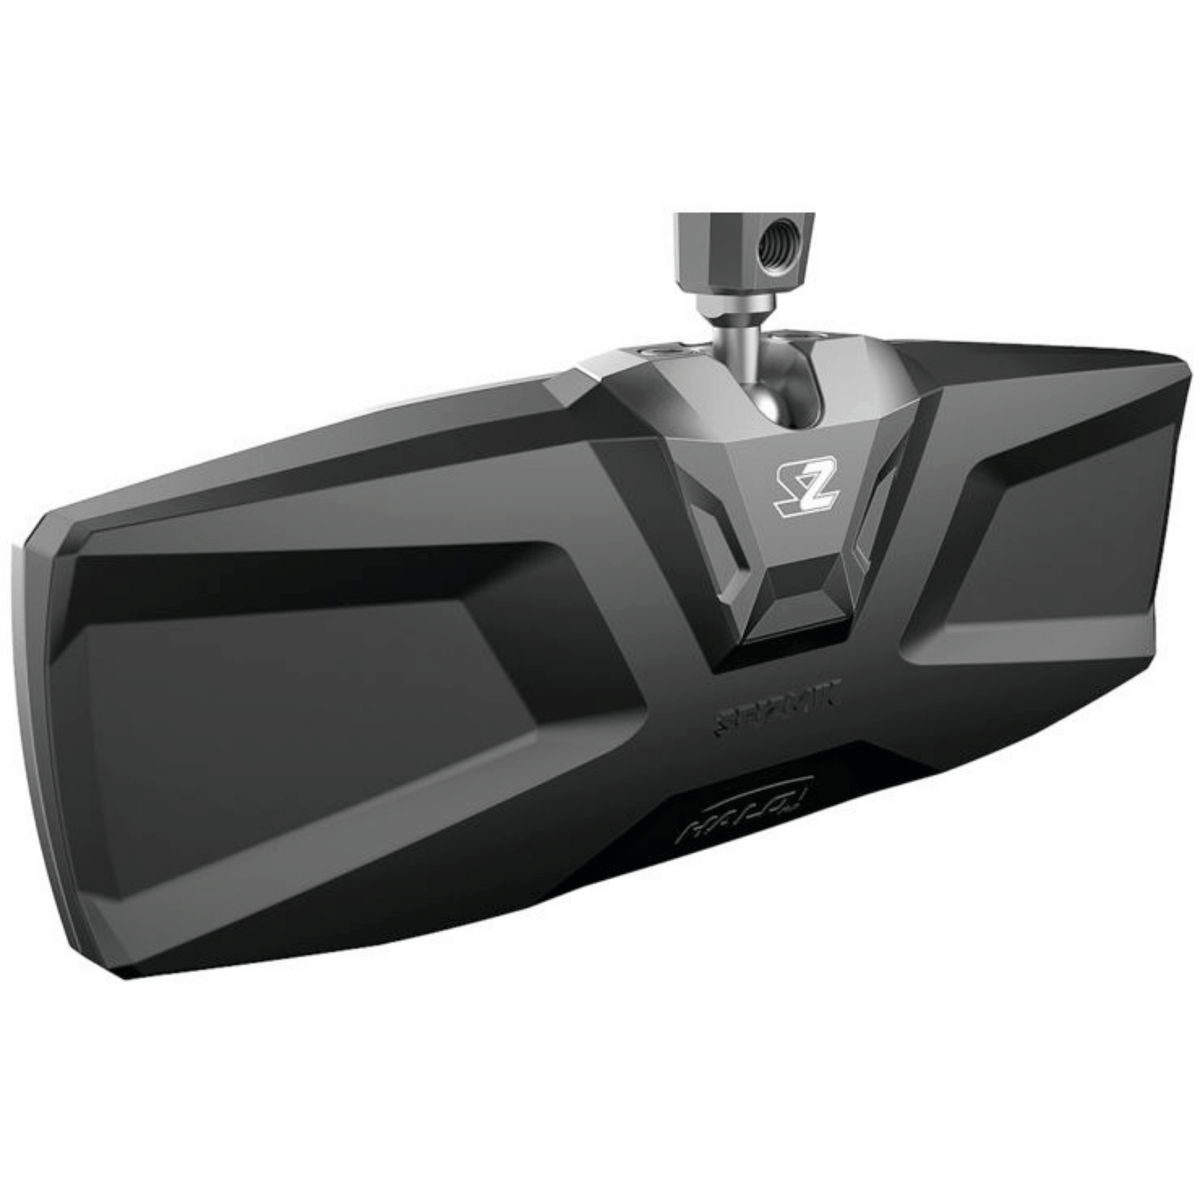 Halo-RA Billet Rear View Mirror (Universal)